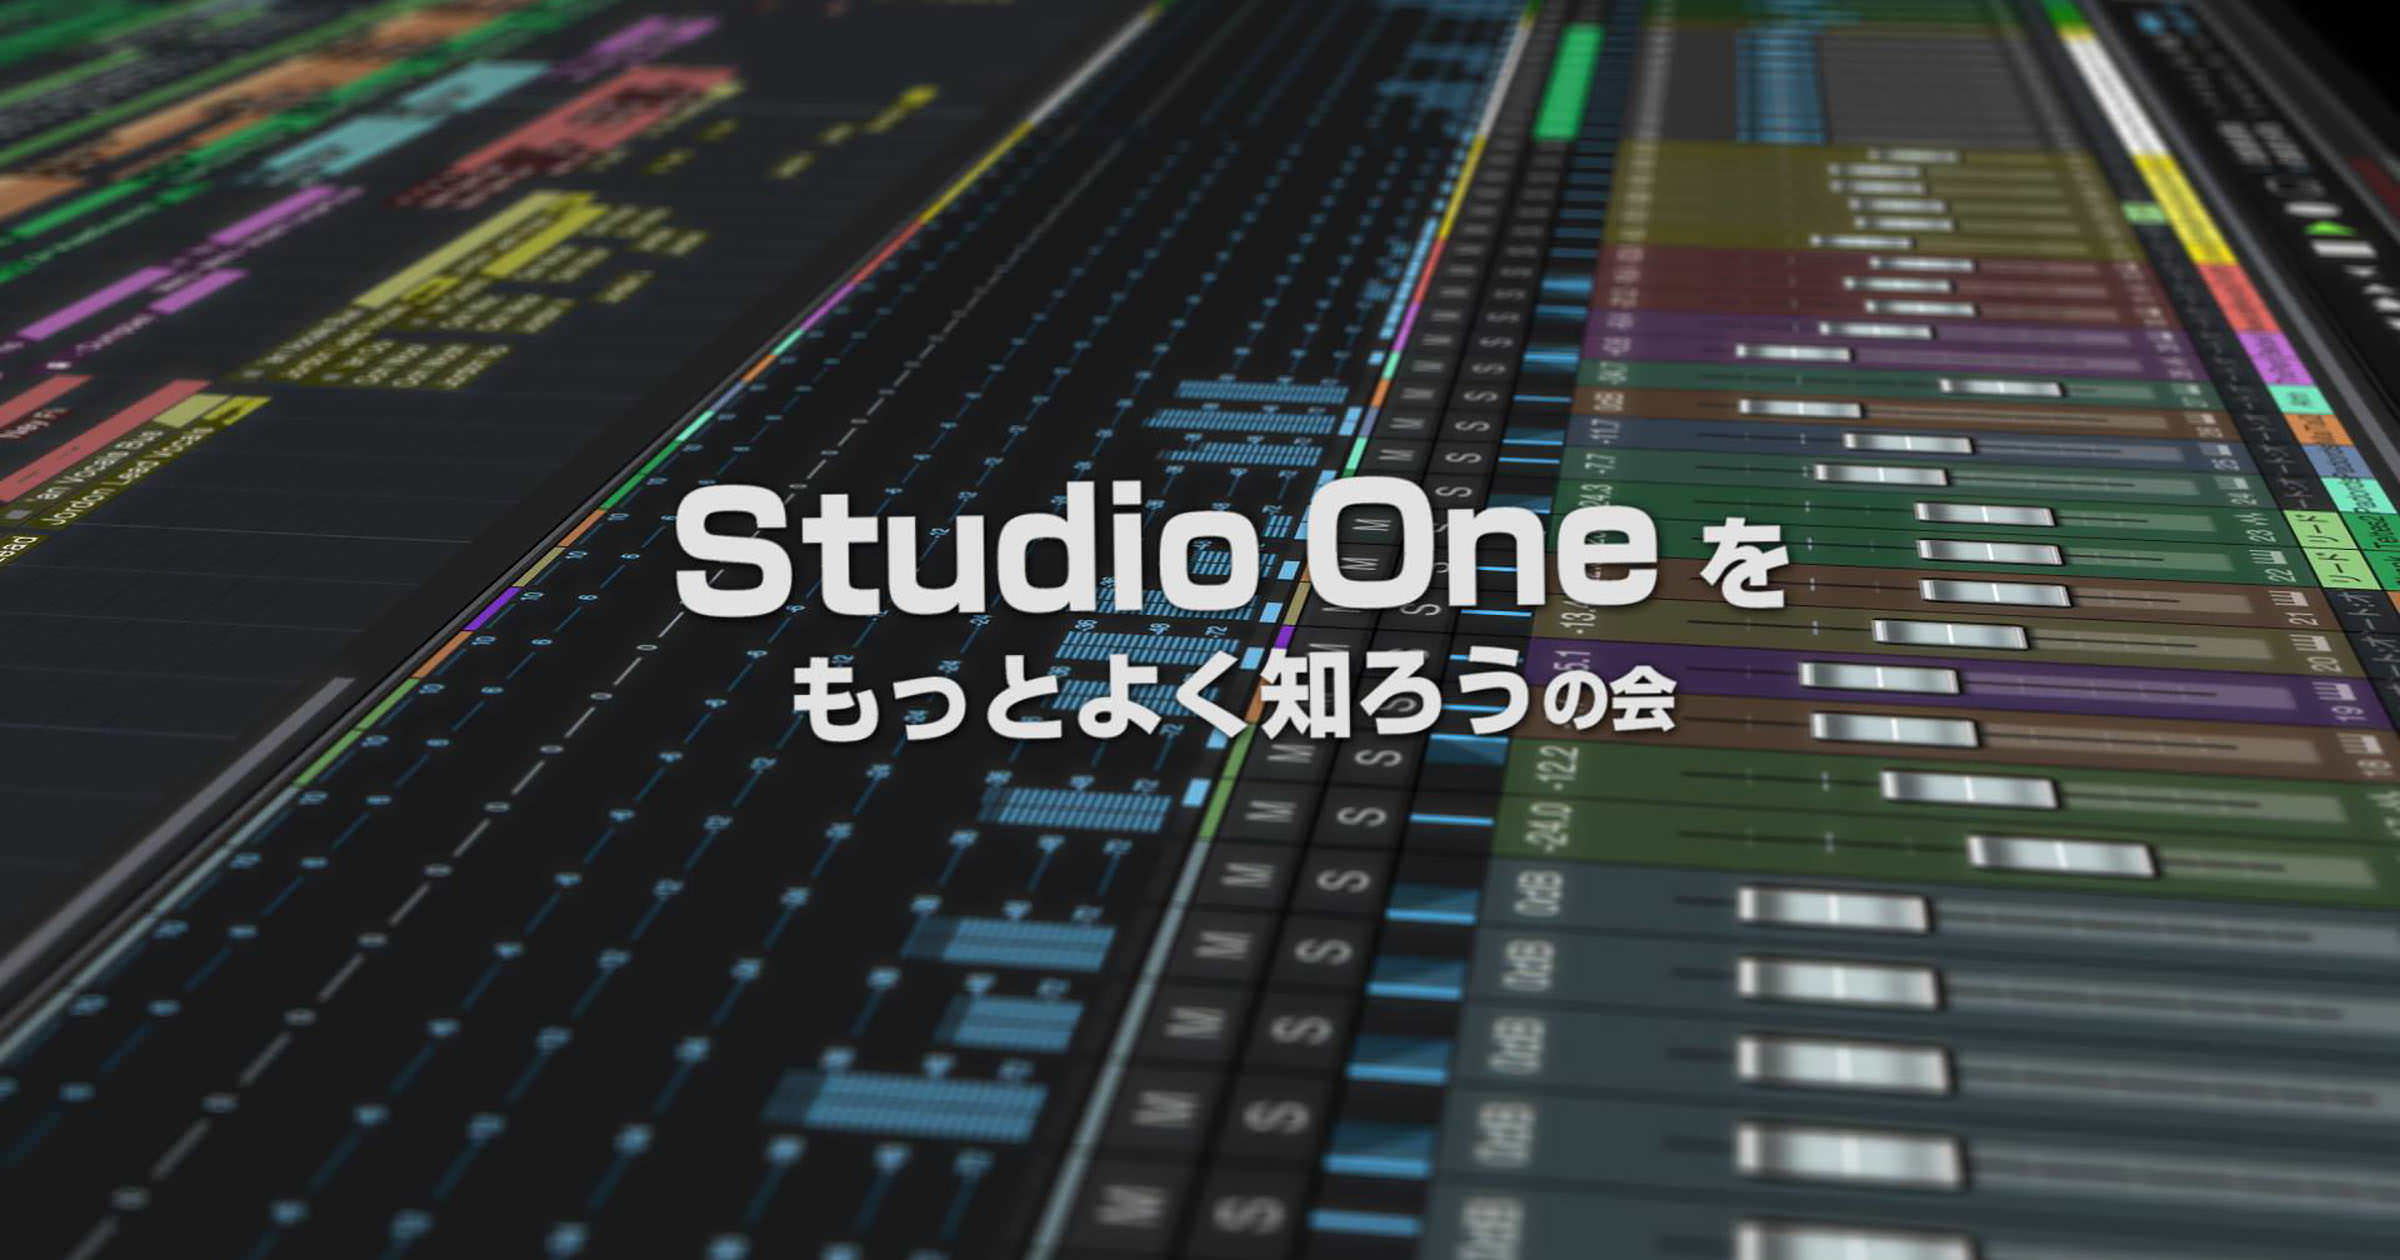 PreSonus Studio One YouTube Channel